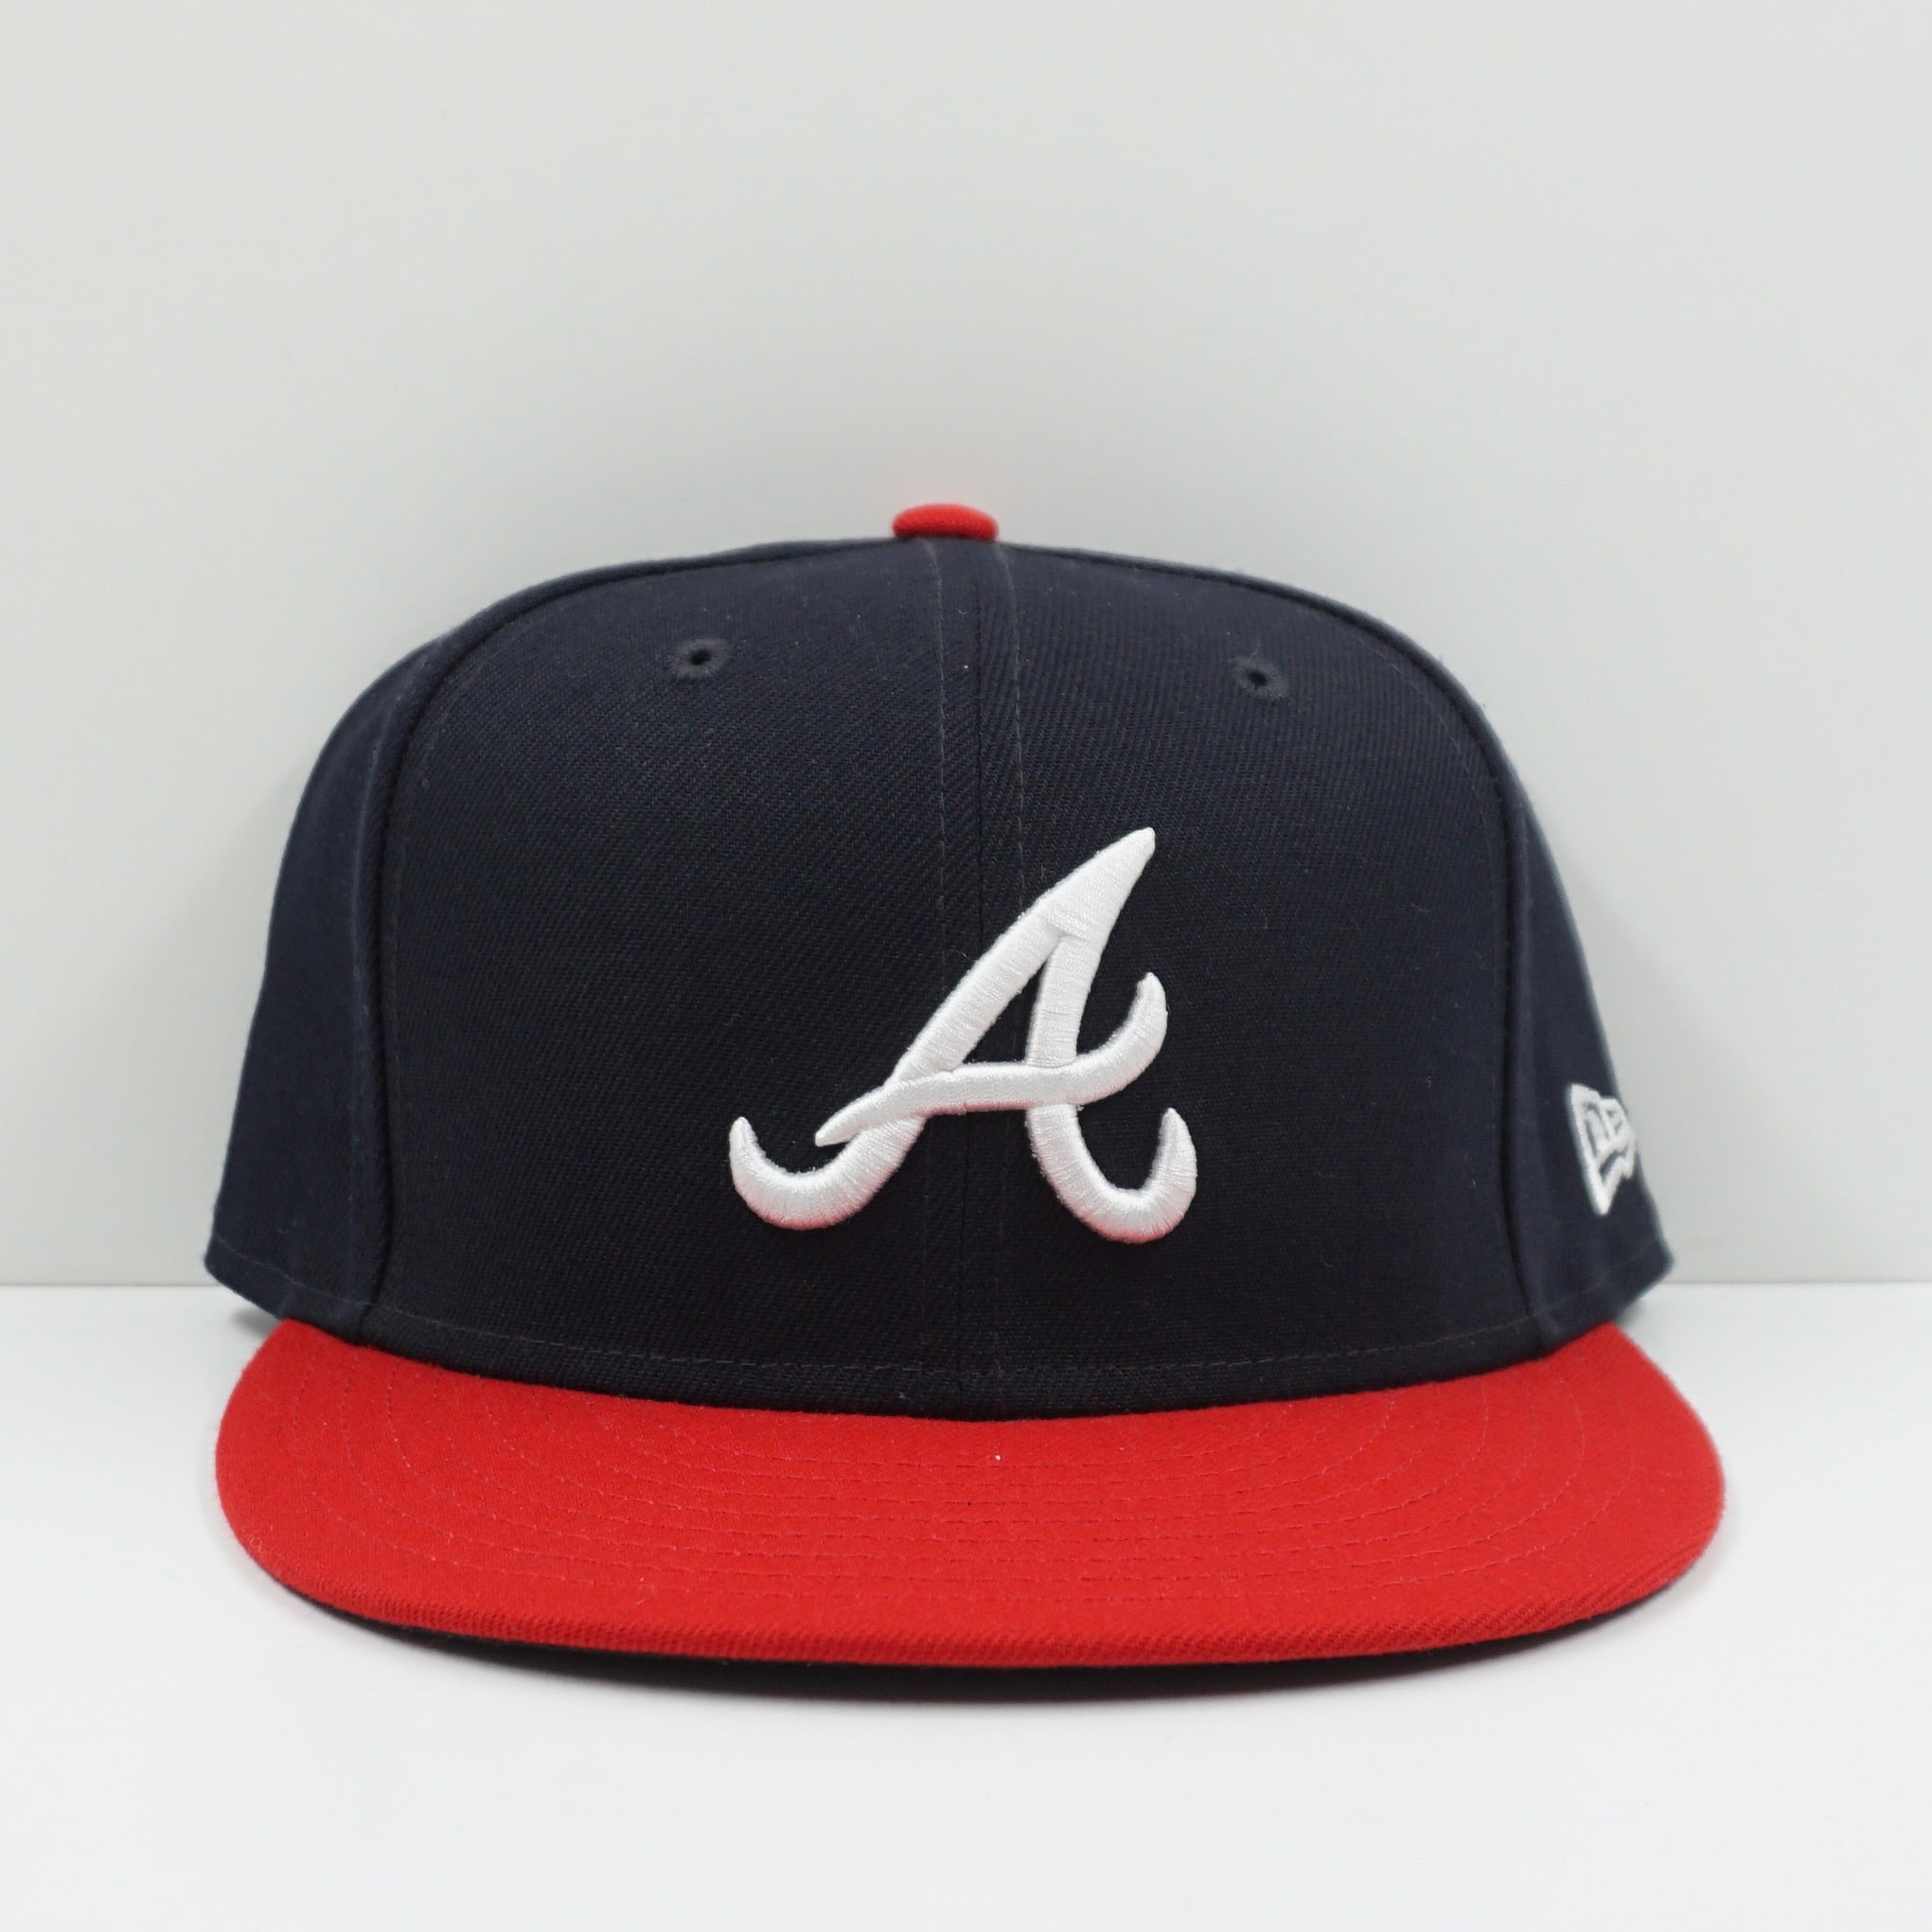 New Era Atlanta Braves Navy/Red Fitted Cap